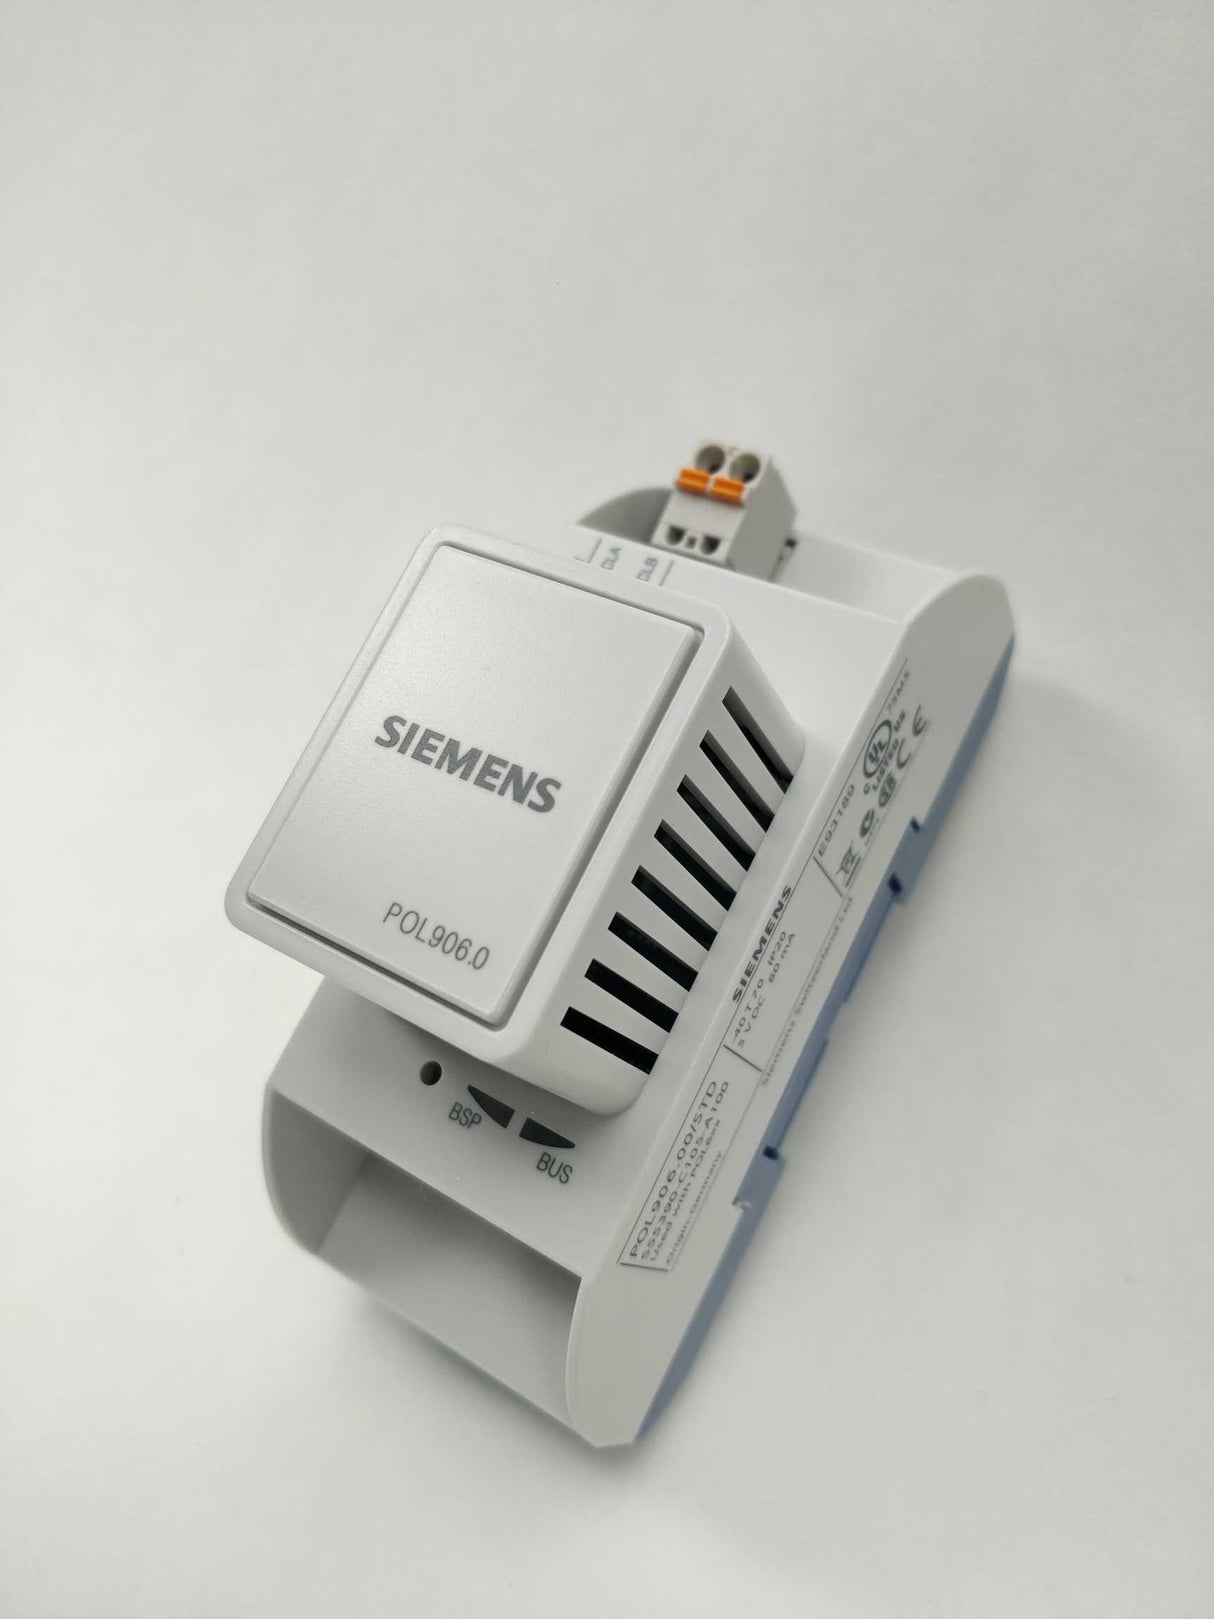 Siemens POL906.00. S55390-C105-A100 POL906.00/STD Communication Module